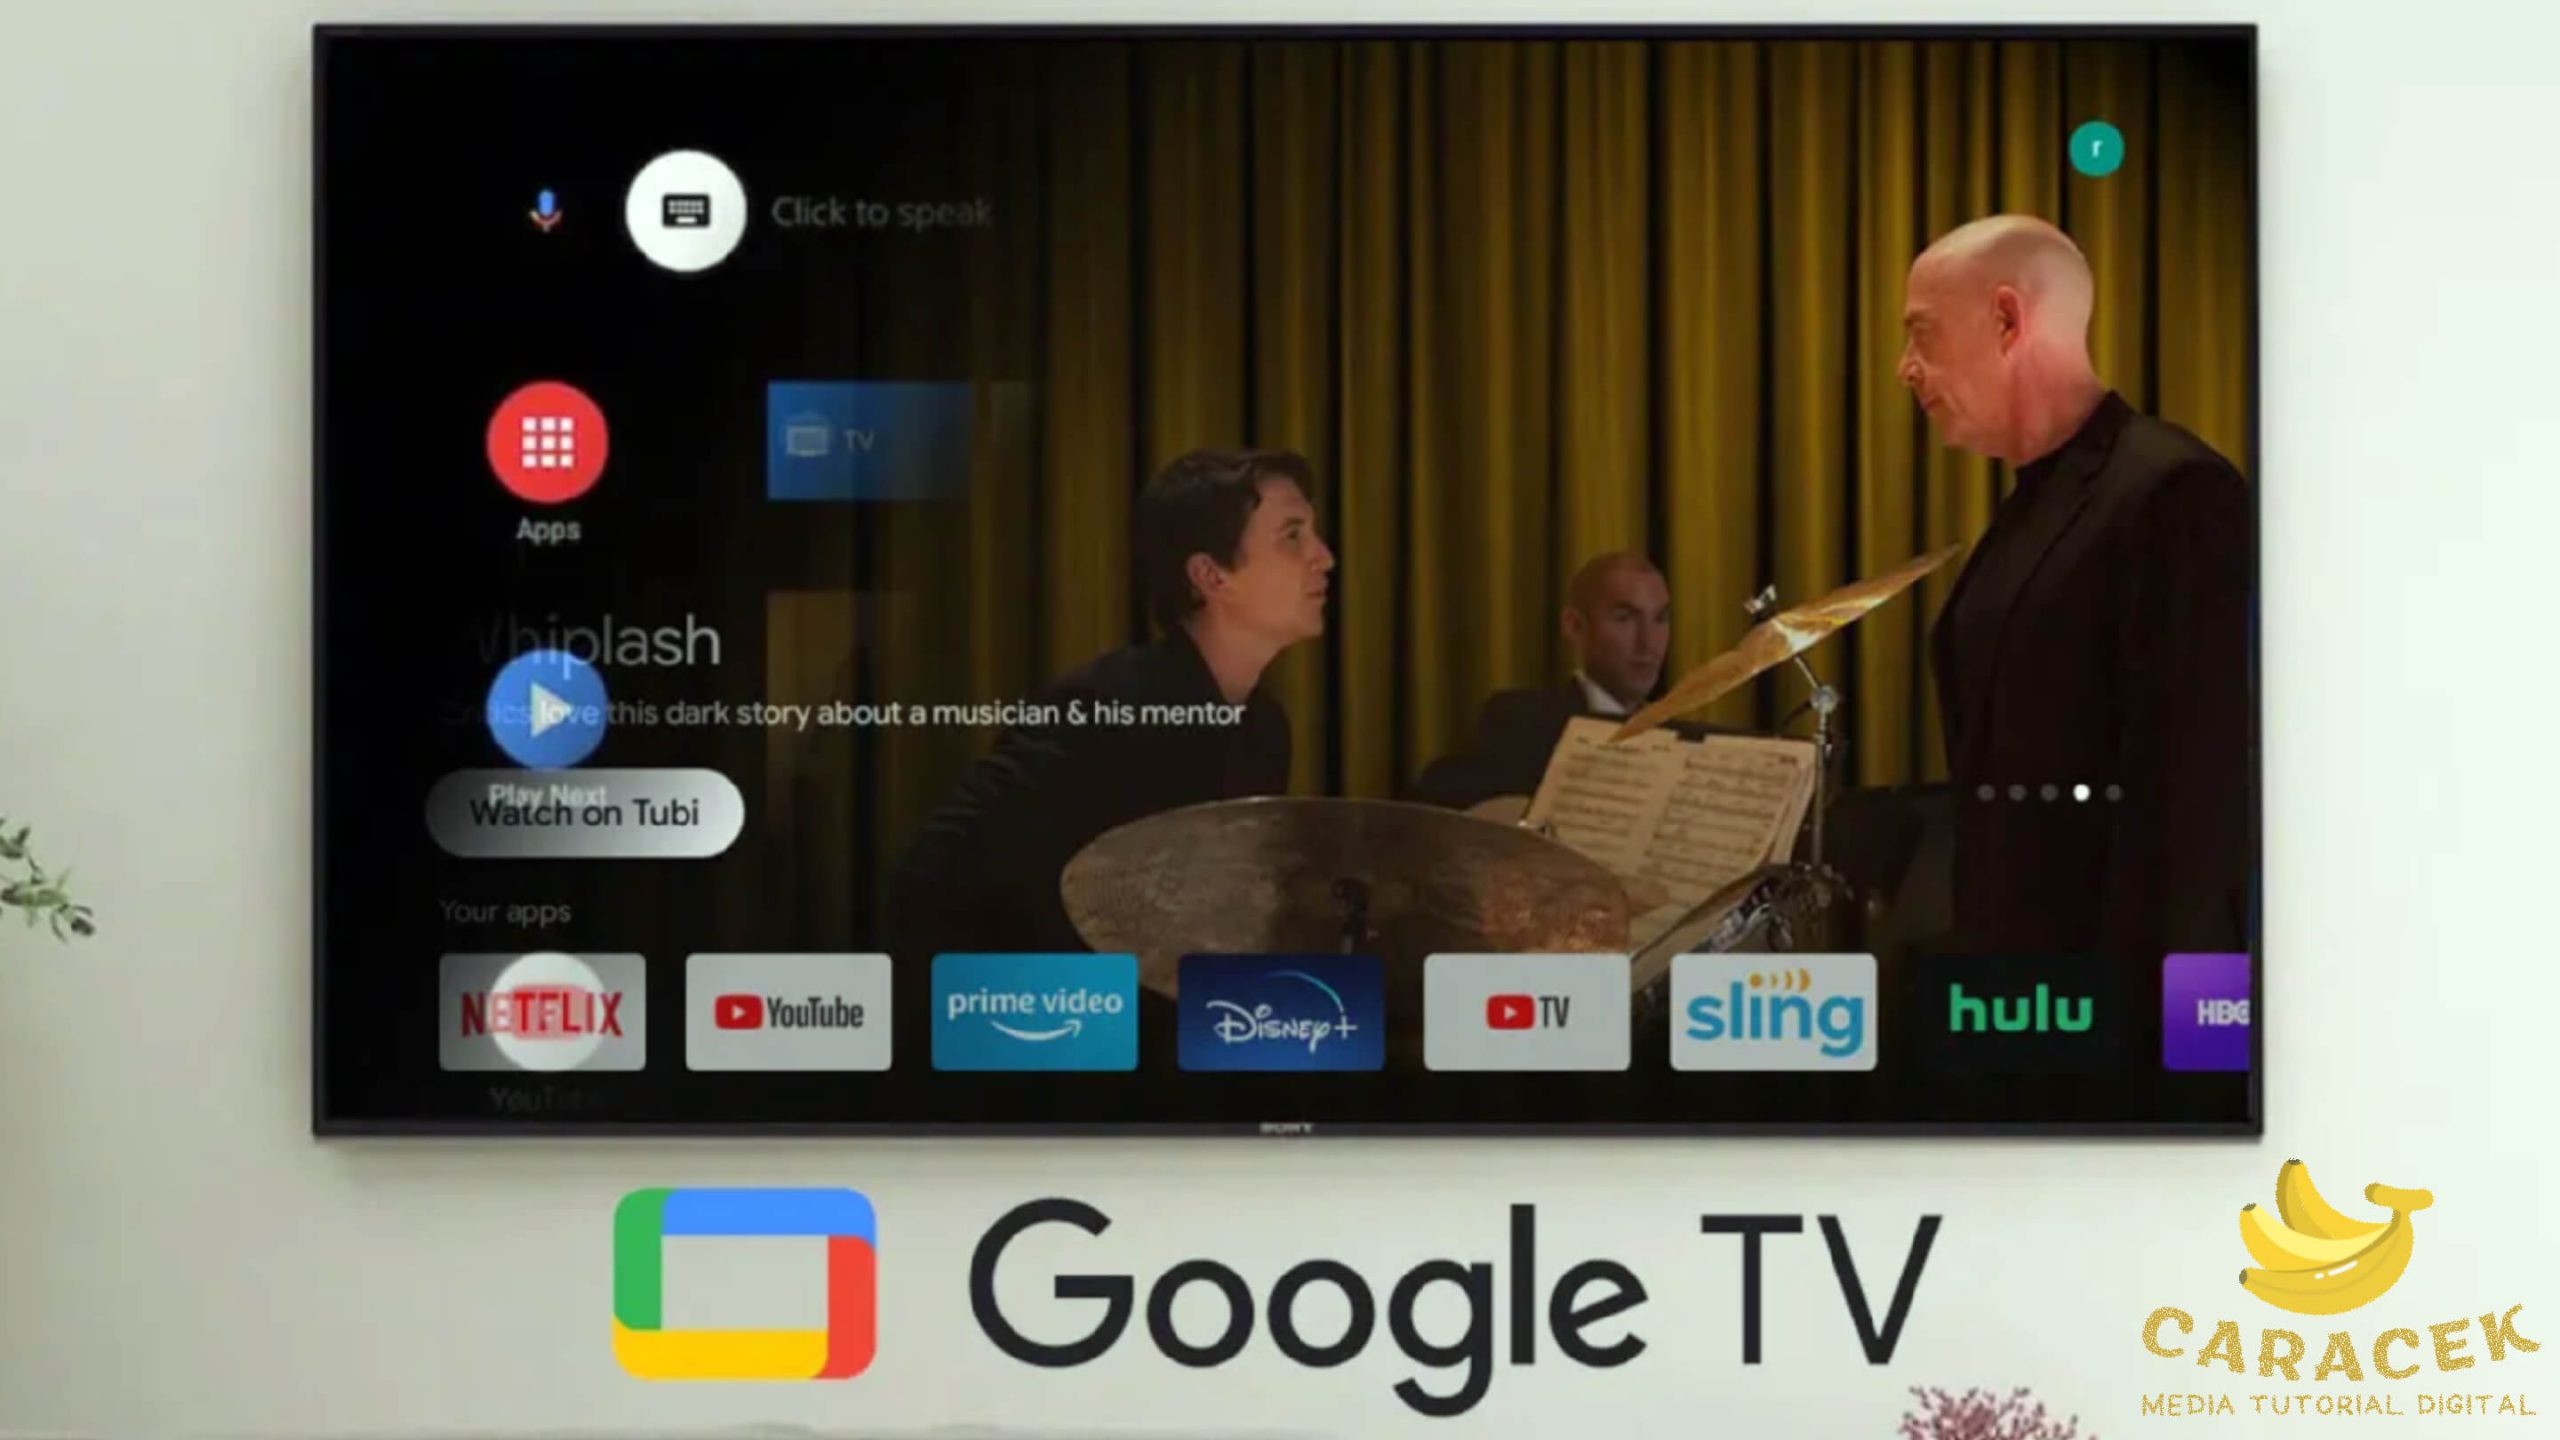 Cara Hapus Google TV